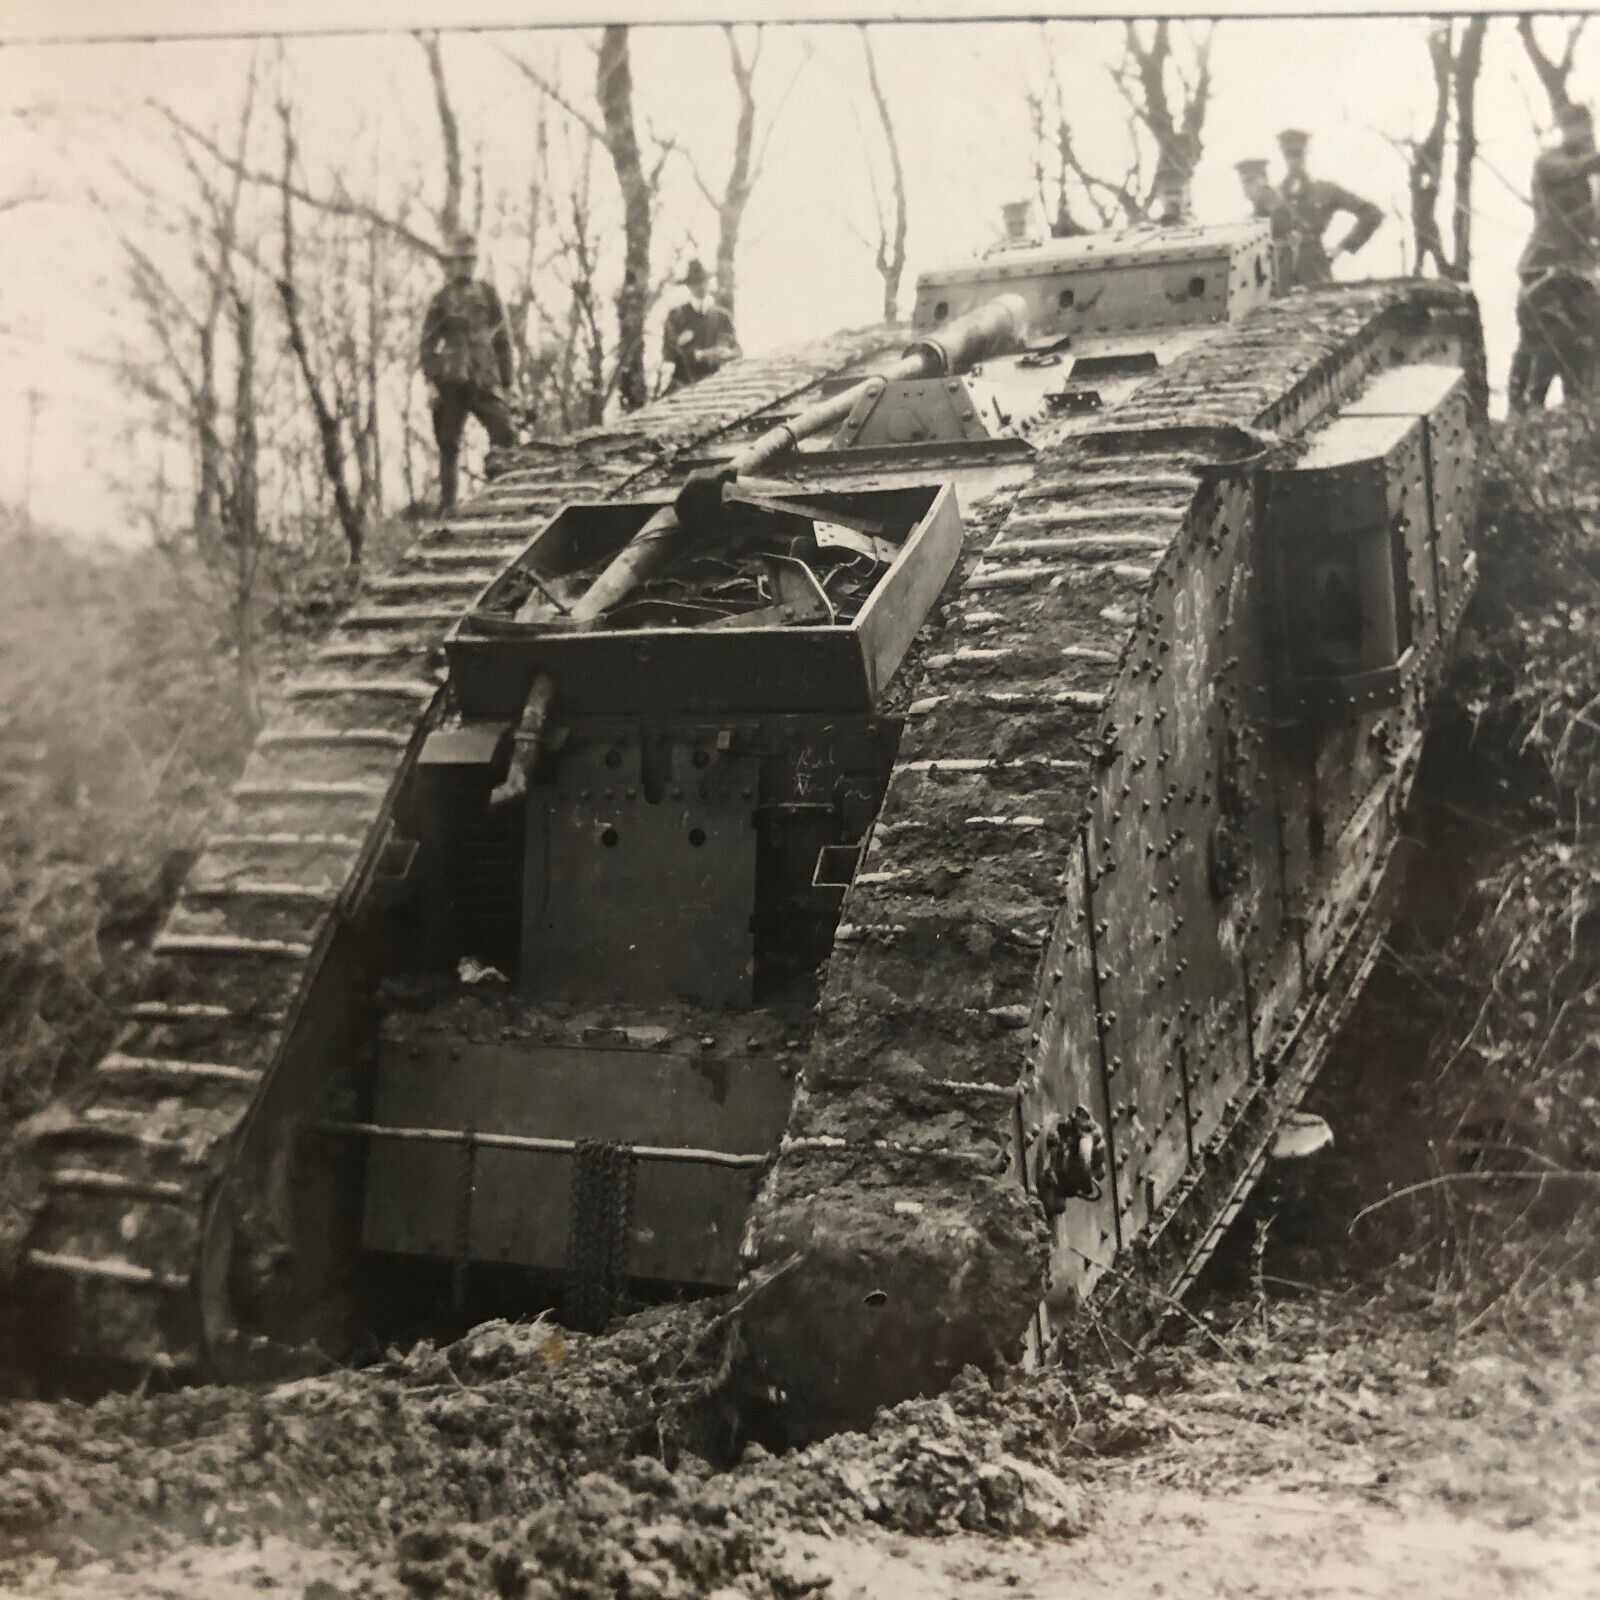 Early Military Tank WW1 World War 1 Glass Plate Negative Lantern Slide